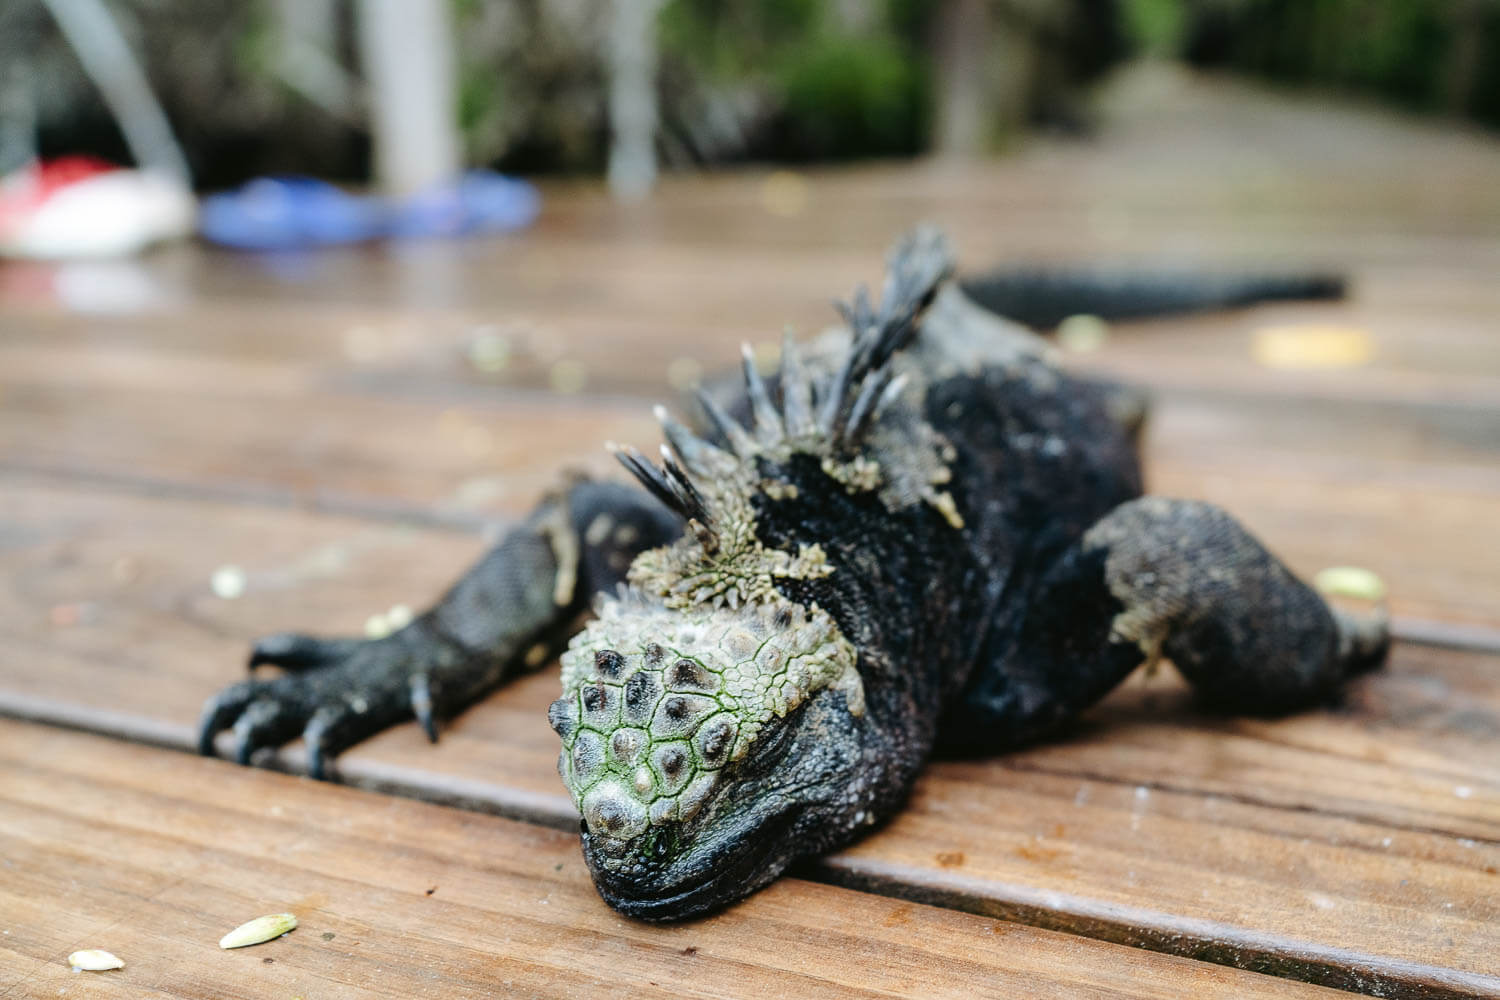 A marine iguana at the wooden deck of Concha Perla lagoon